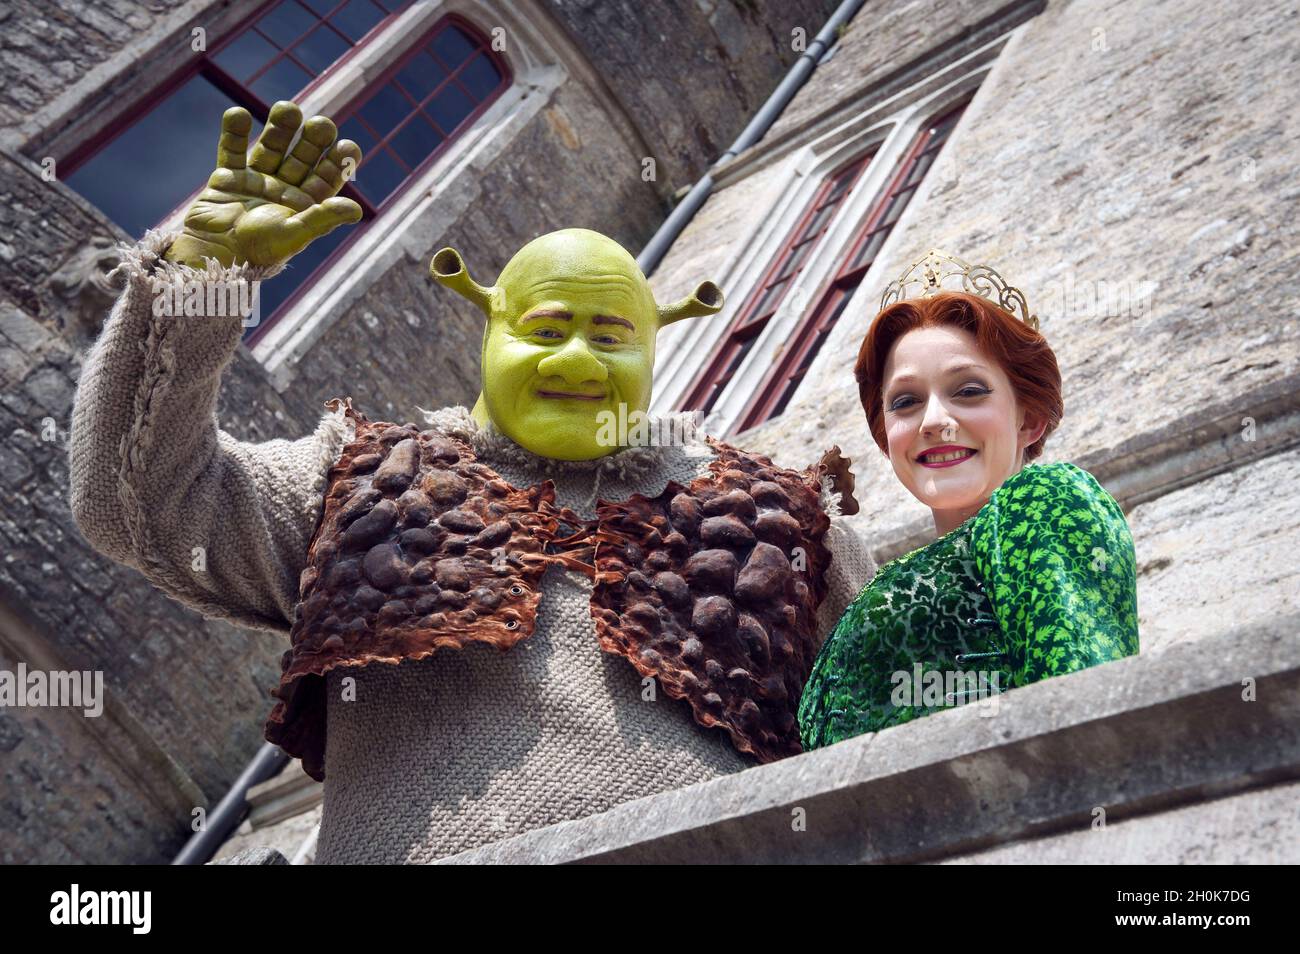 Memes About Shrek & Princess Fiona At The 2022 Met Gala